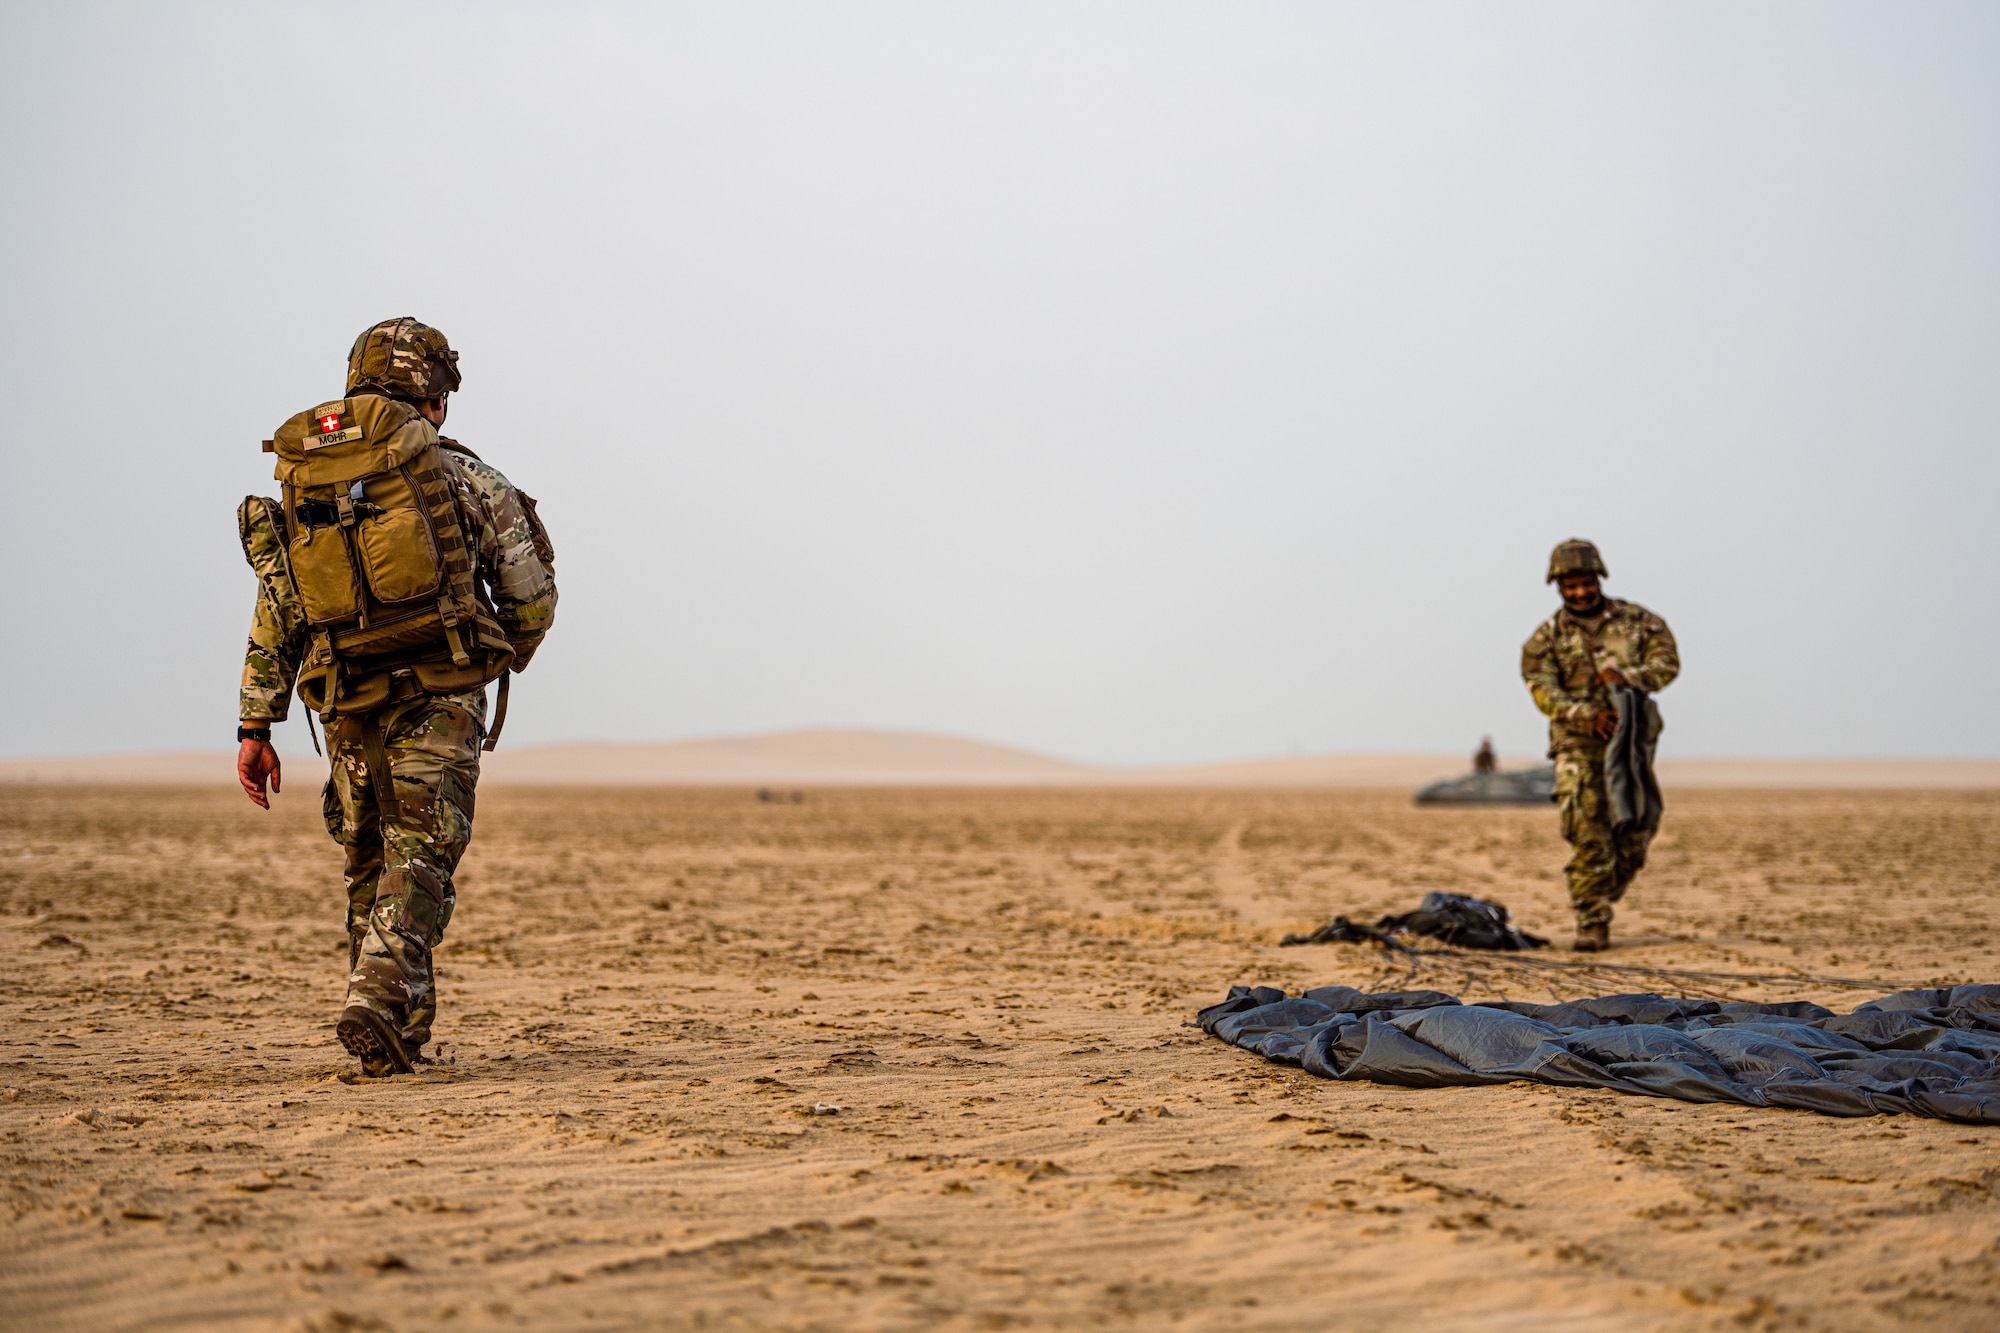 Military members walking through the desert